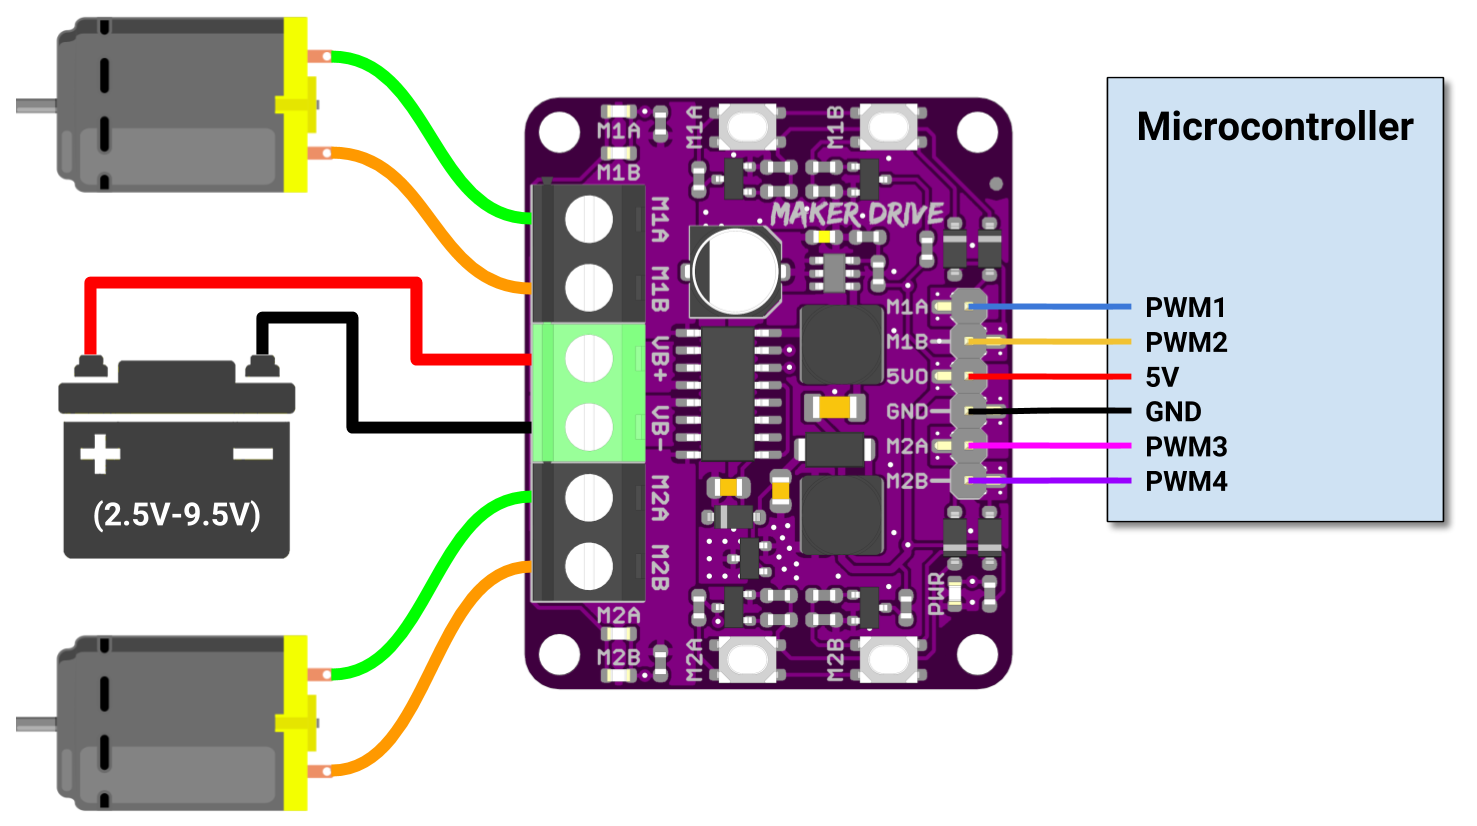 Circuit diagram using pyboard microcontroller, Maker Drive and two DC motors